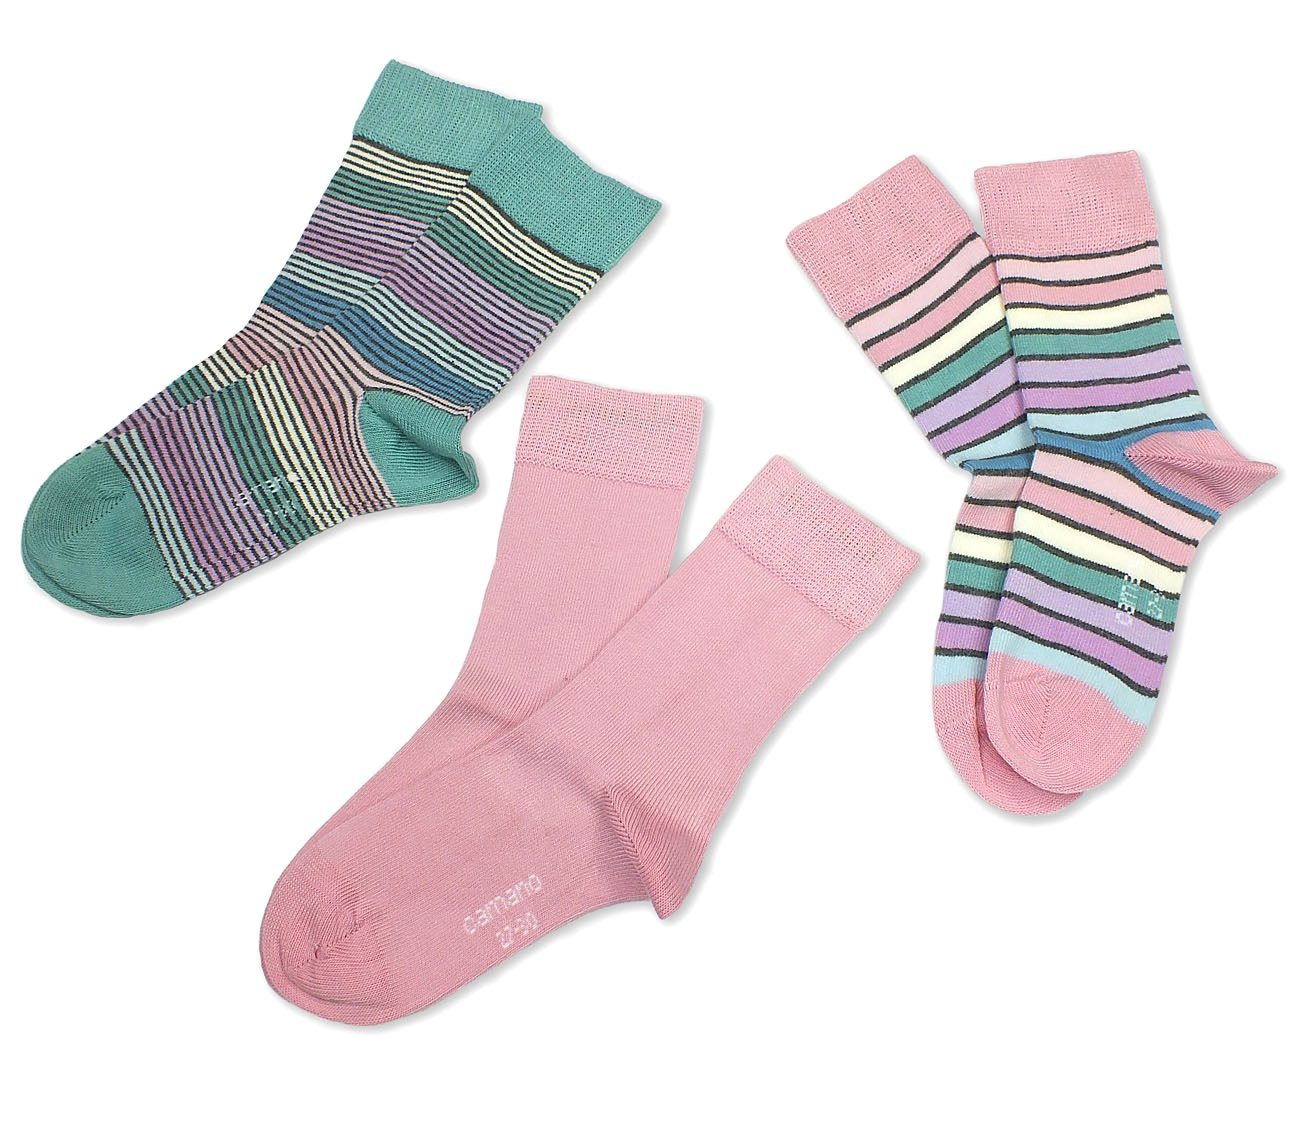 Camano Langsocken CA3795 (Packung, 3-Paar, 3 Paar) Kinder Mädchen oder Jungen Socken, Baumwolle, Unisex Kindersocken von Camano